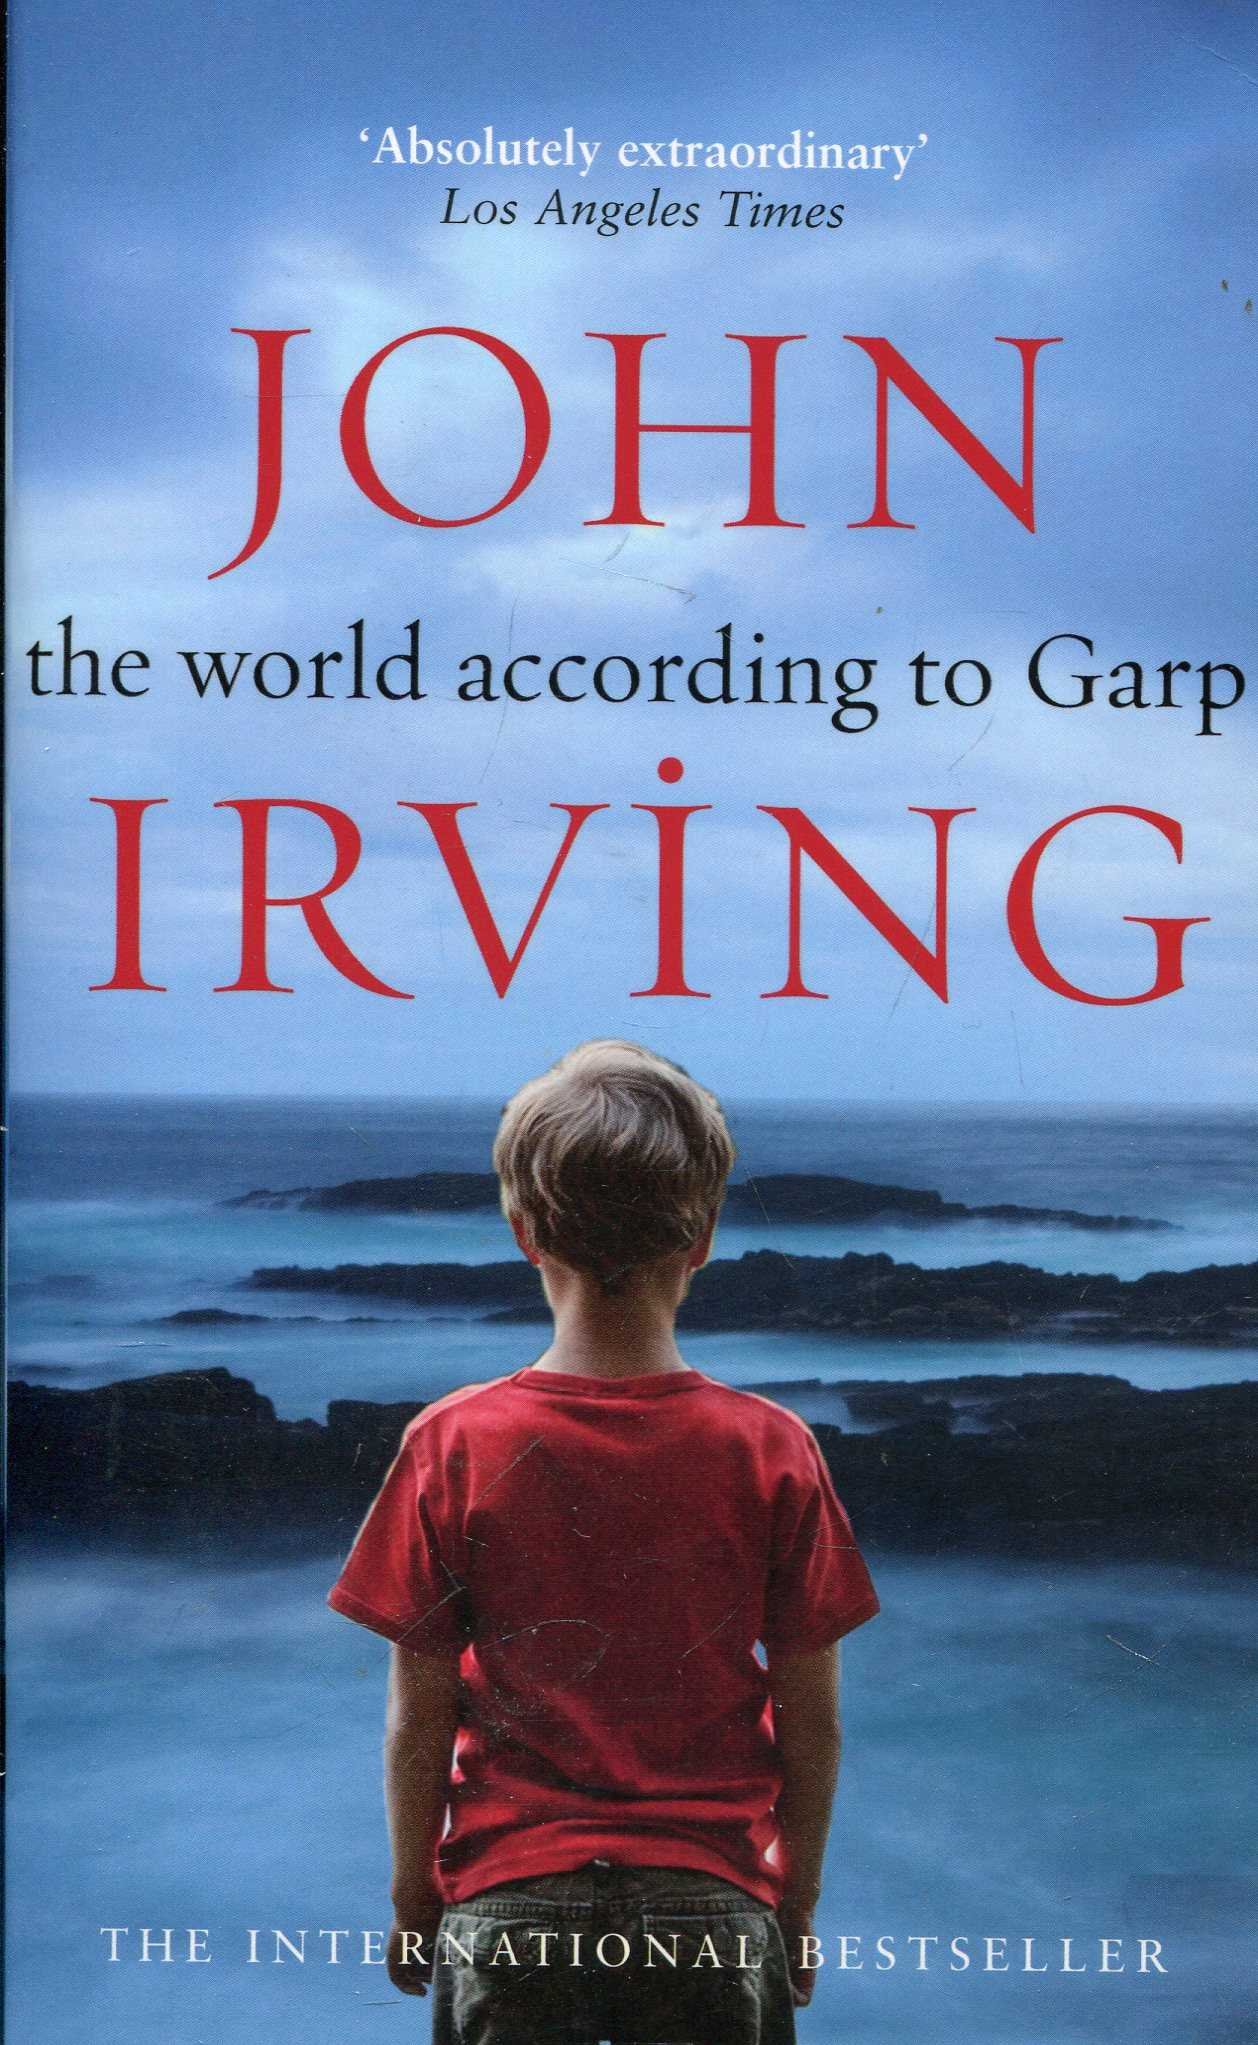 Джон Ирвинг - Мир глазами Гарпа